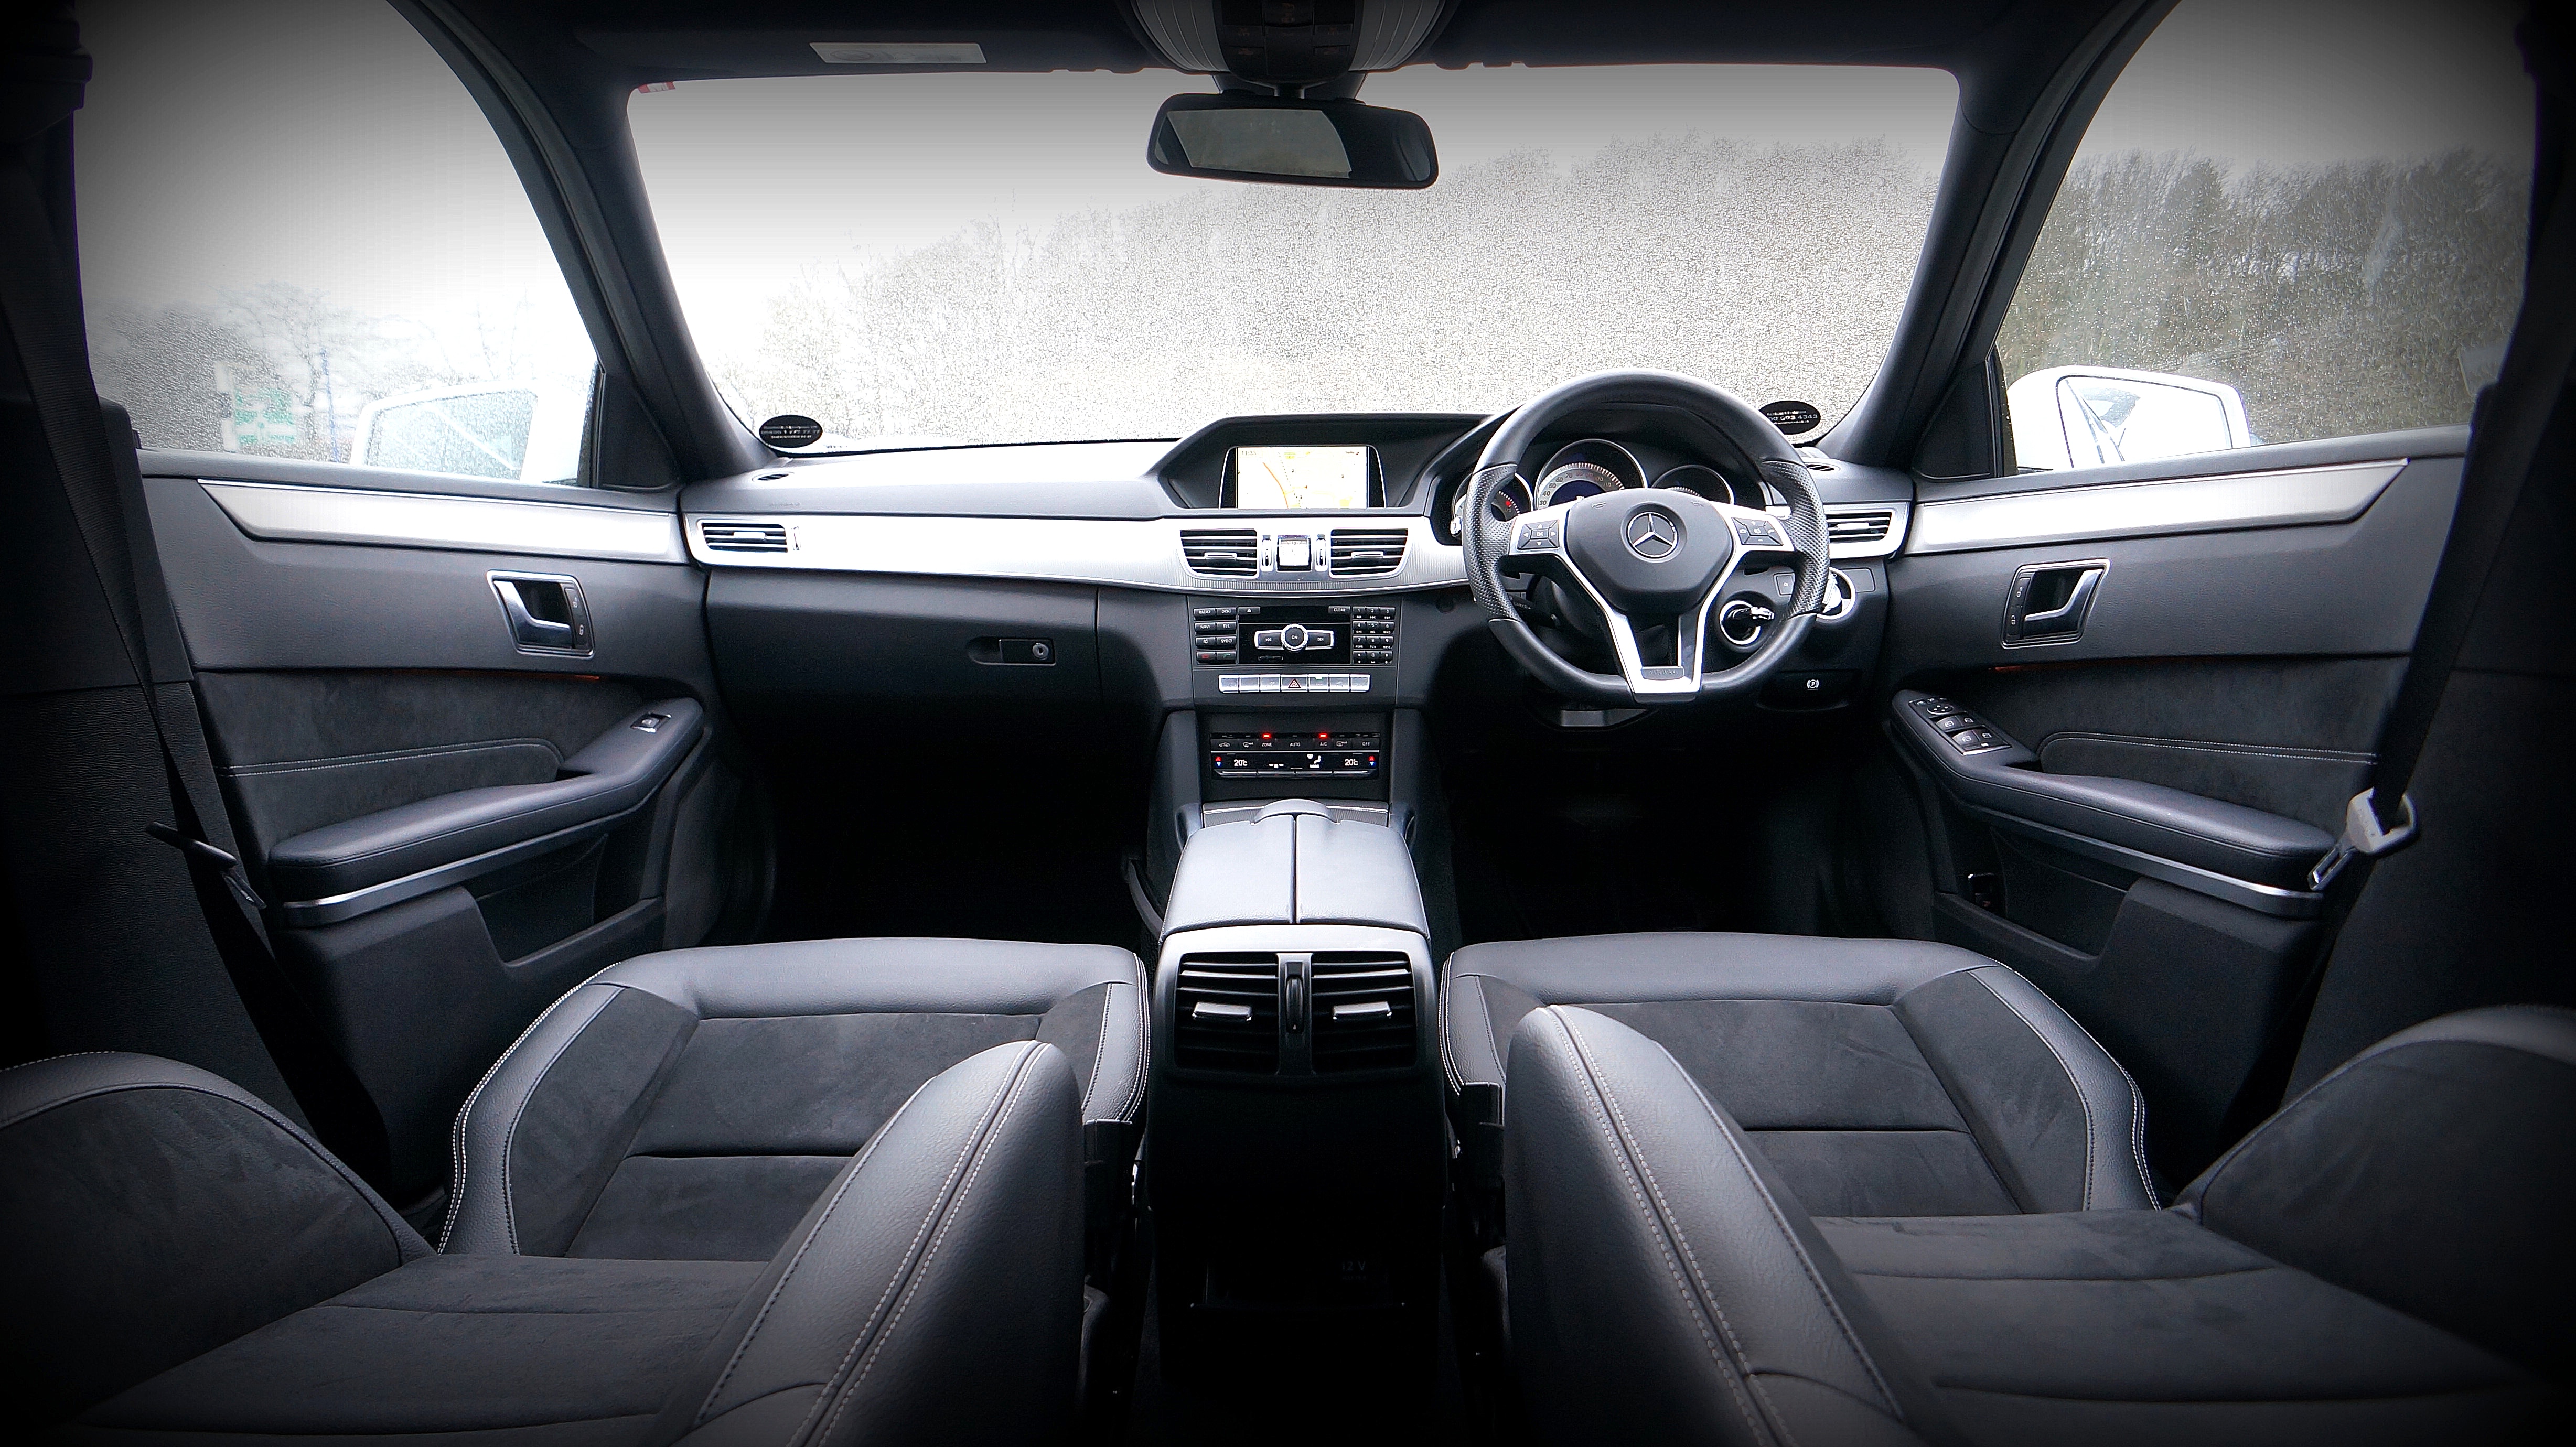 grayscale photo of car interior